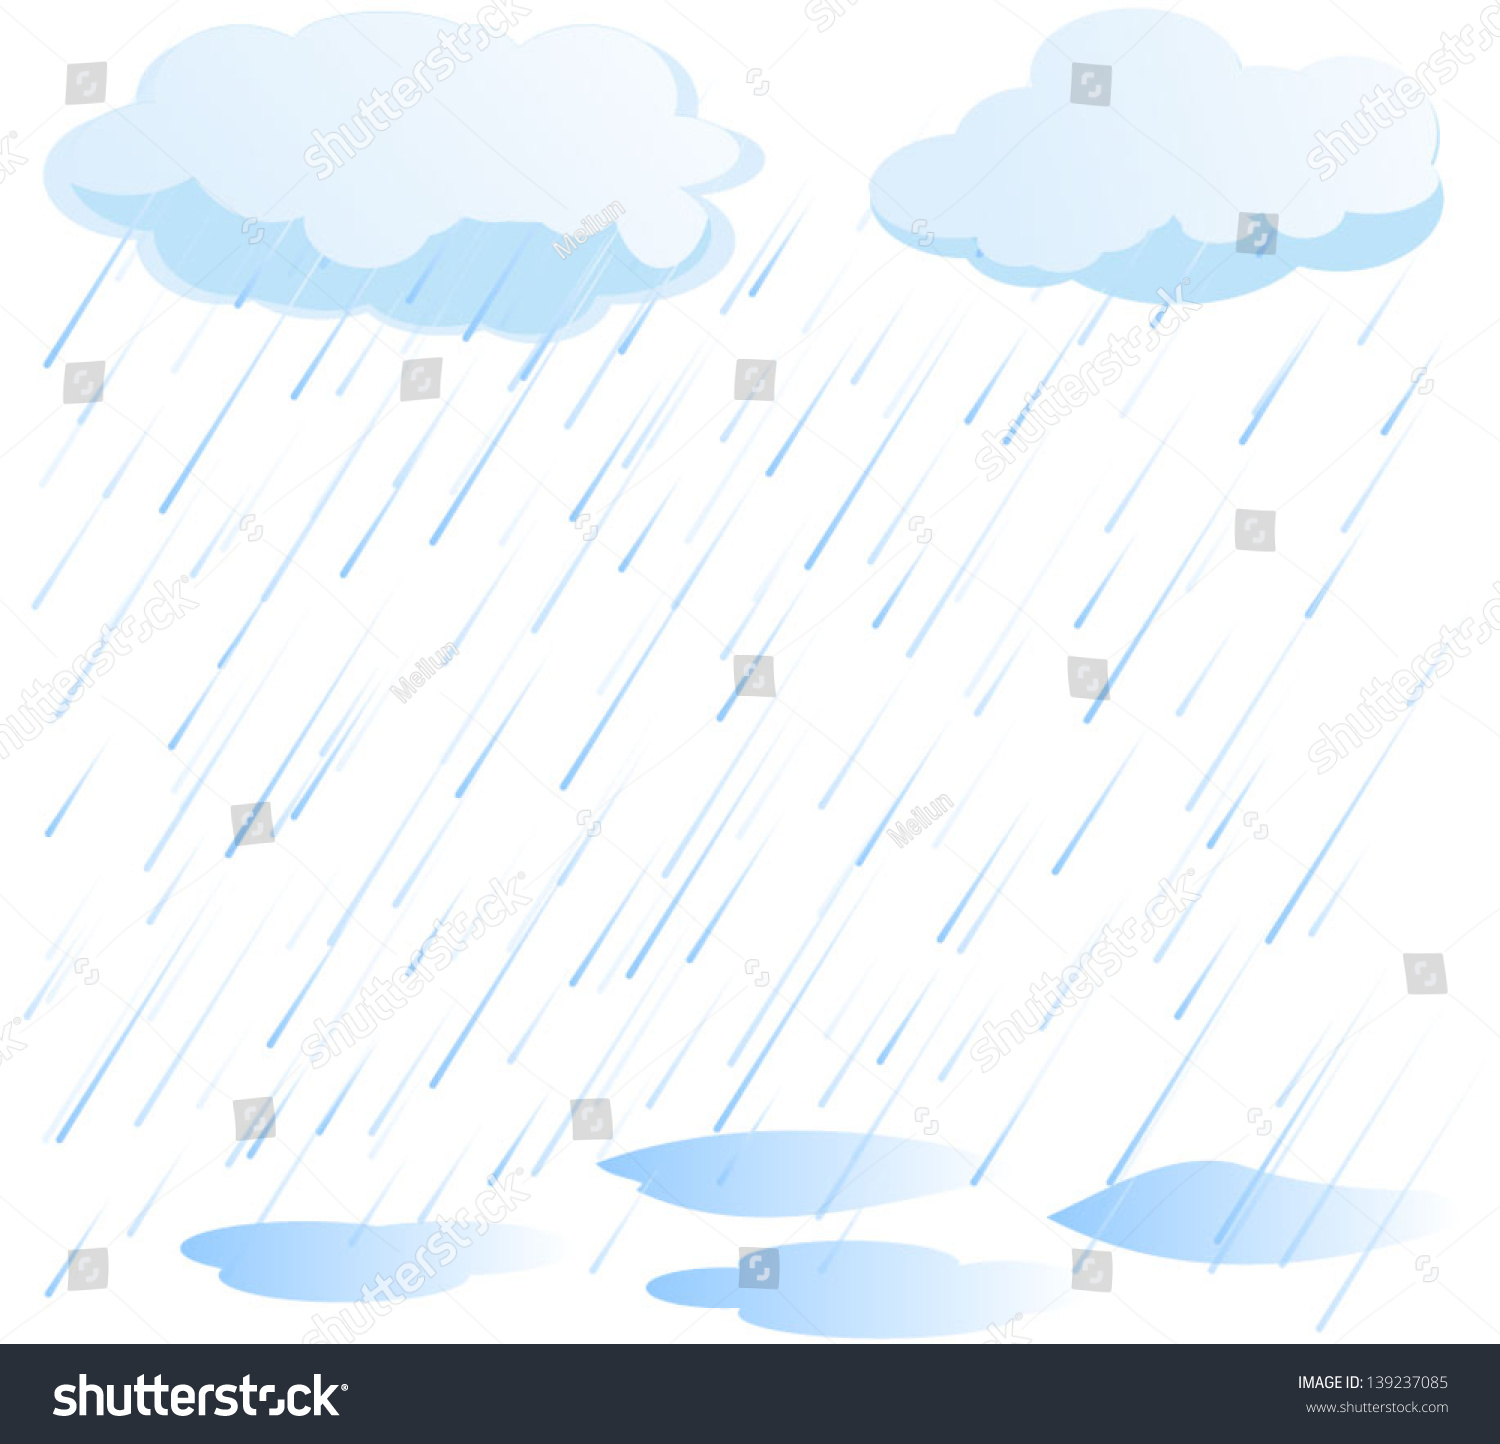 Rain Vector - 139237085 : Shutterstock